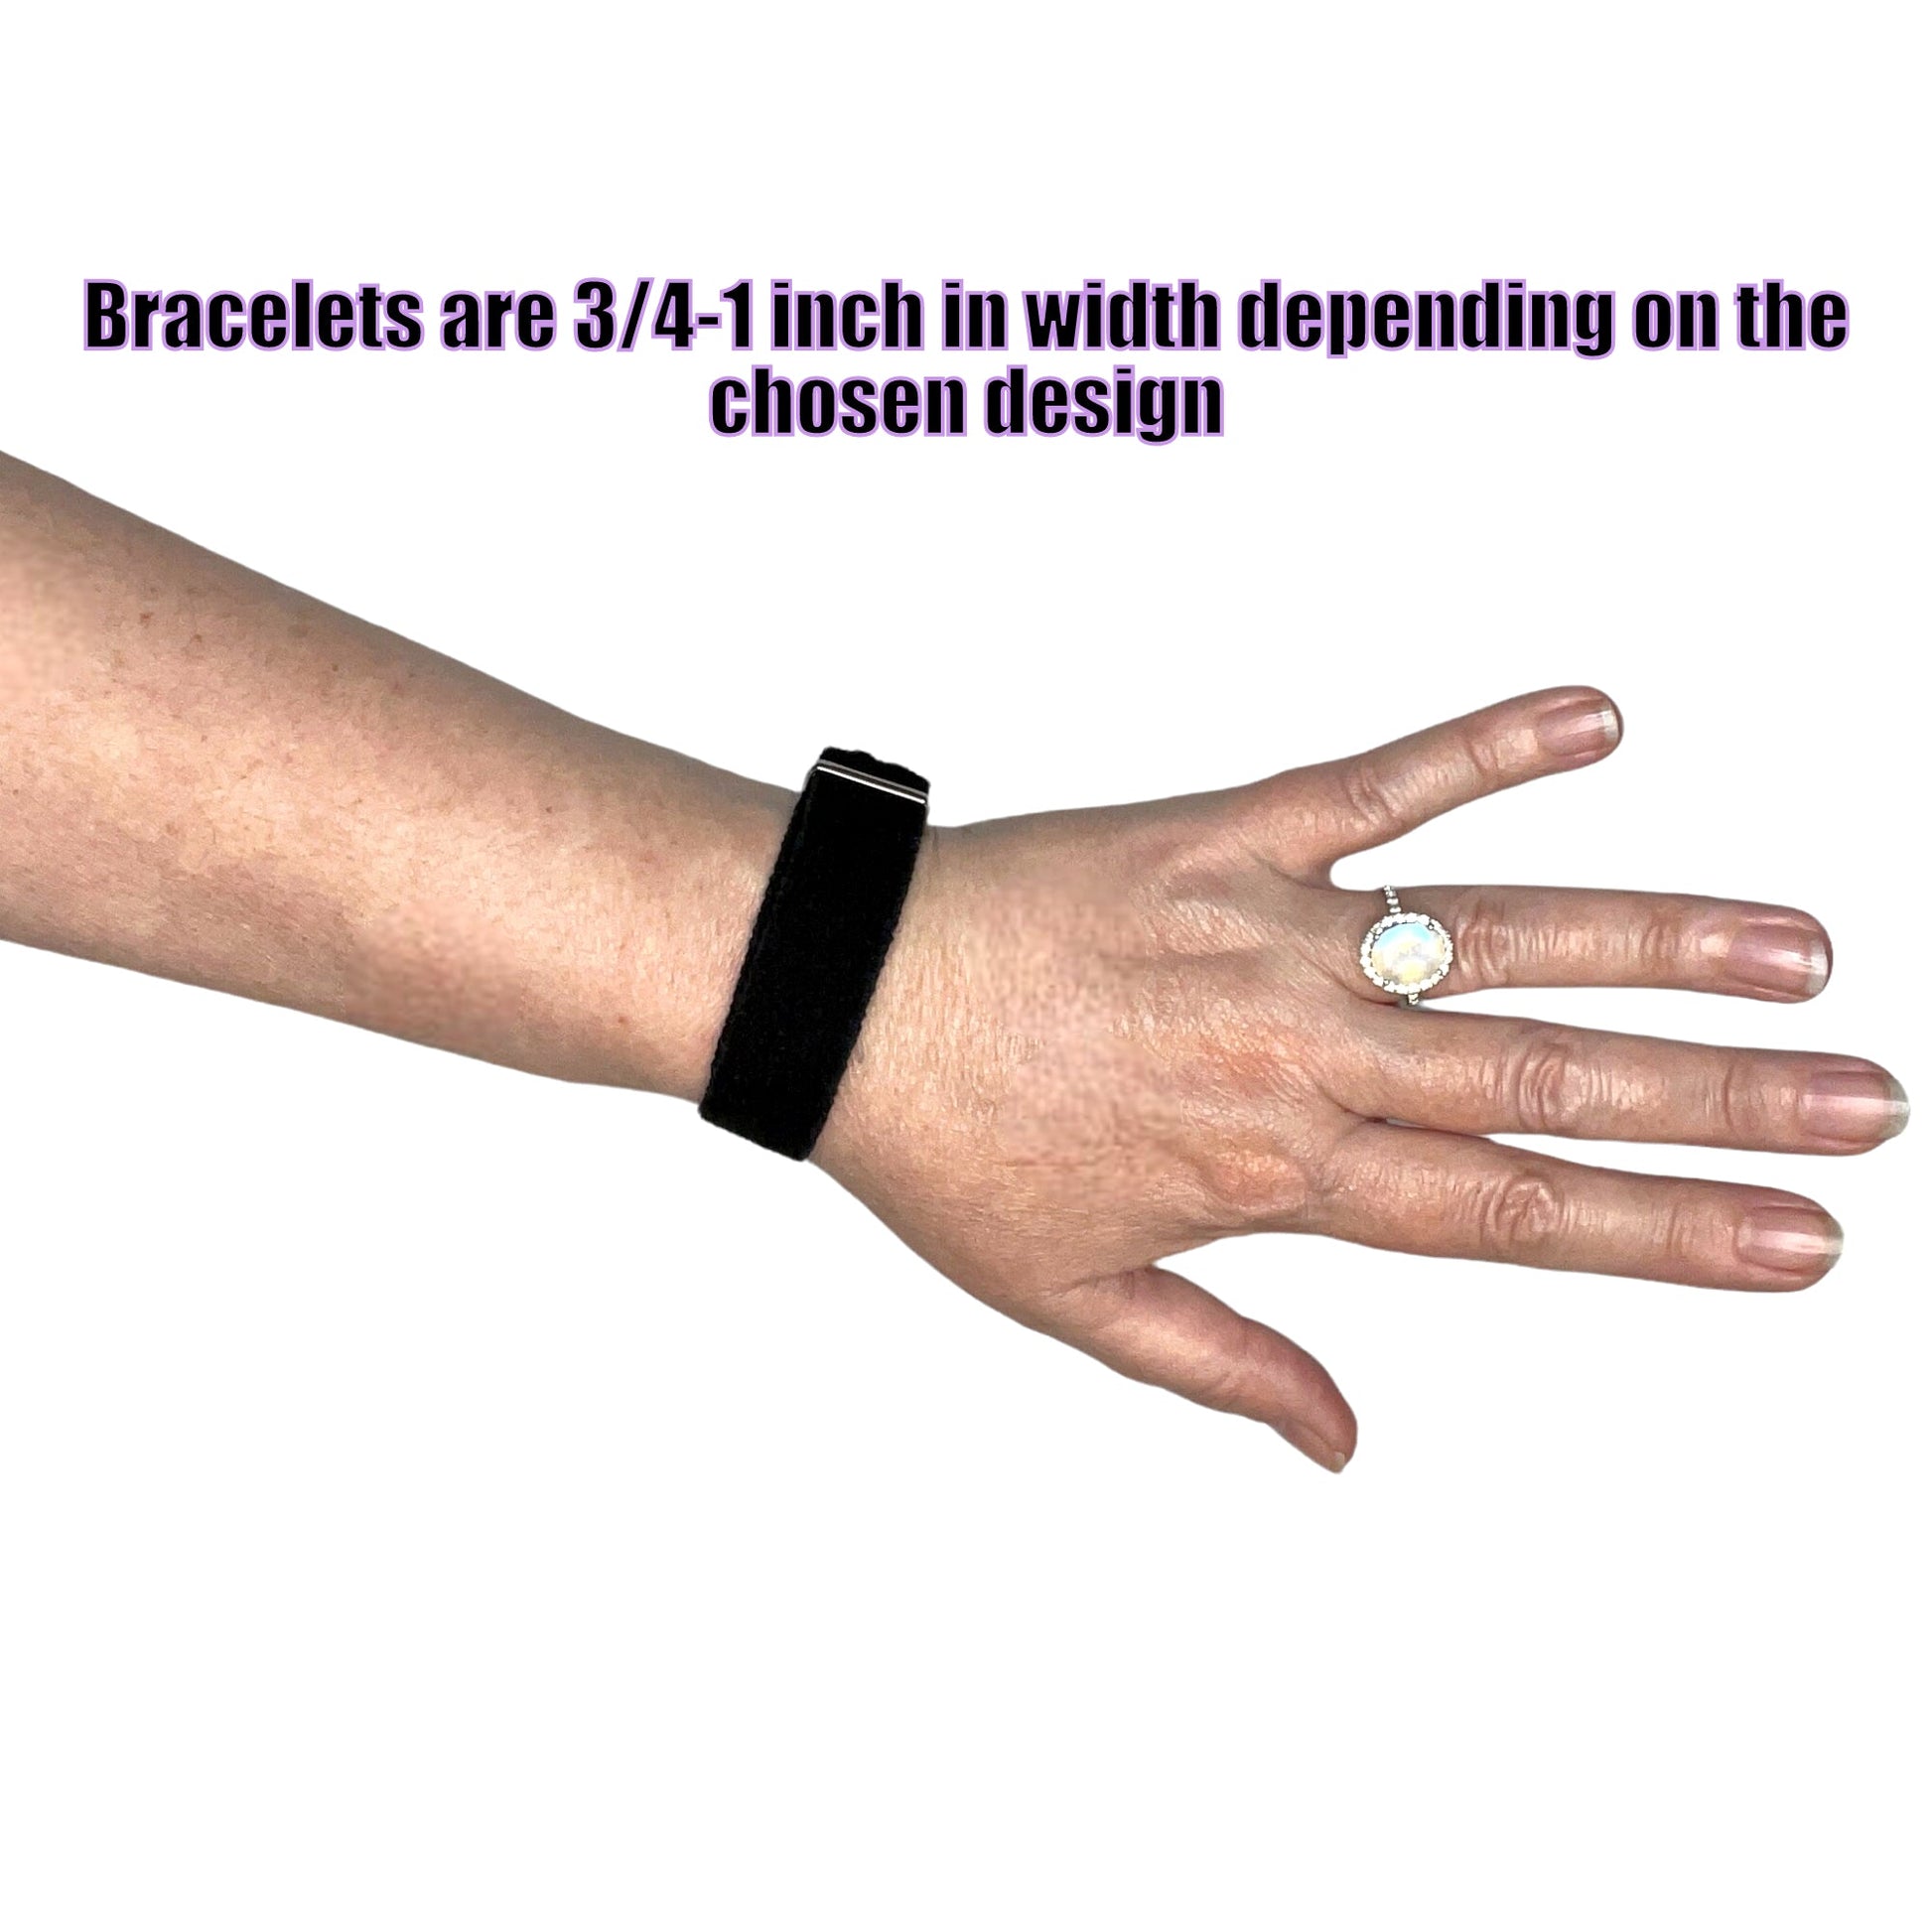 Designer Travel Wristbands-Adjustable Acupressure Band-Motion Sickness-Nausea Relief-Pair - Acupressure Bracelets